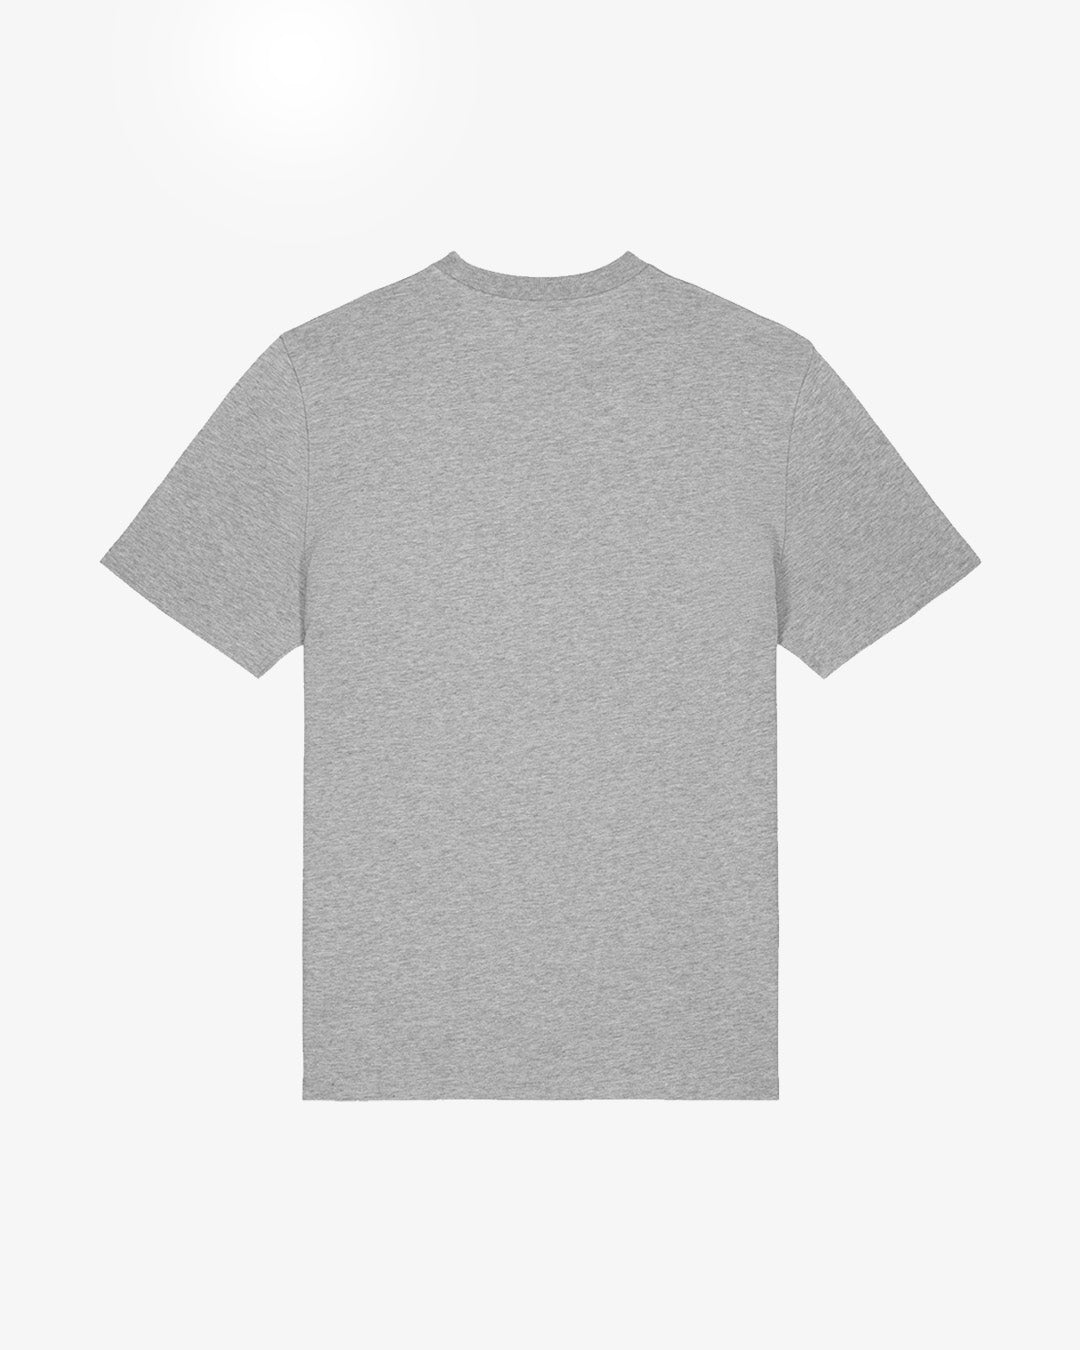 T-shirt ARIEL - Heather grey